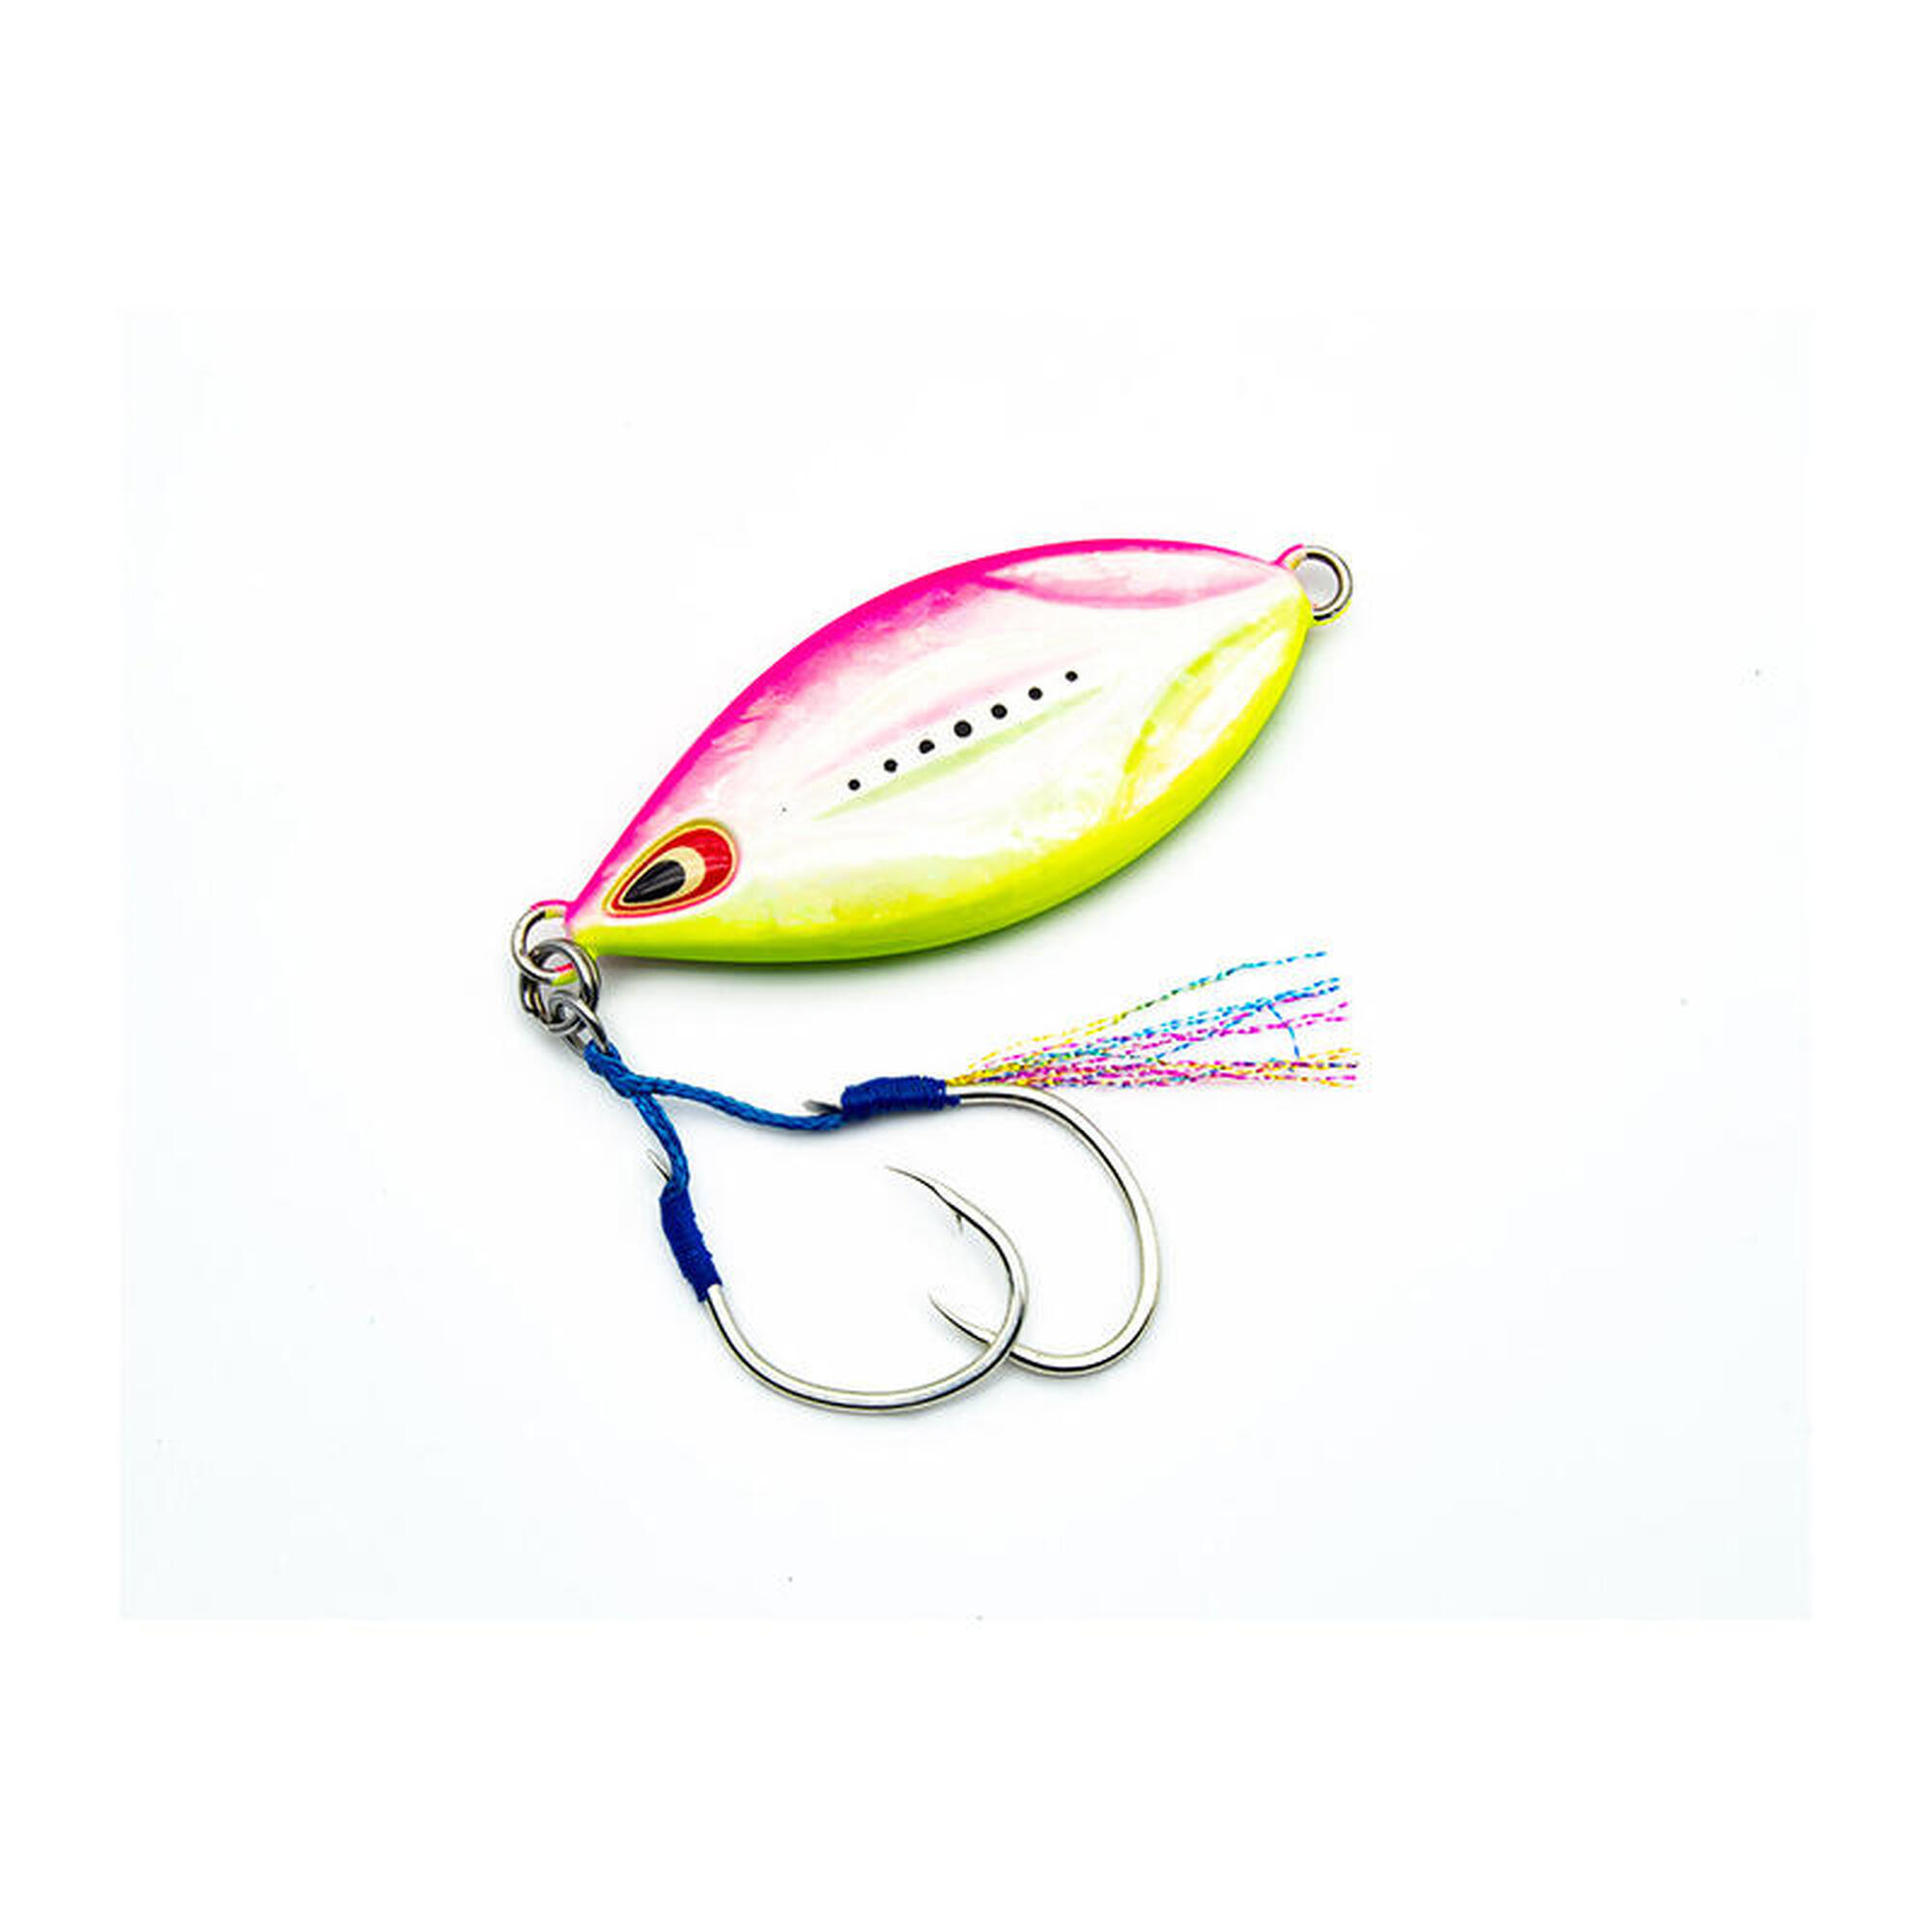 Jig spinning jigging rockfishing slow drop 150 g amarillo/rosa glow #6